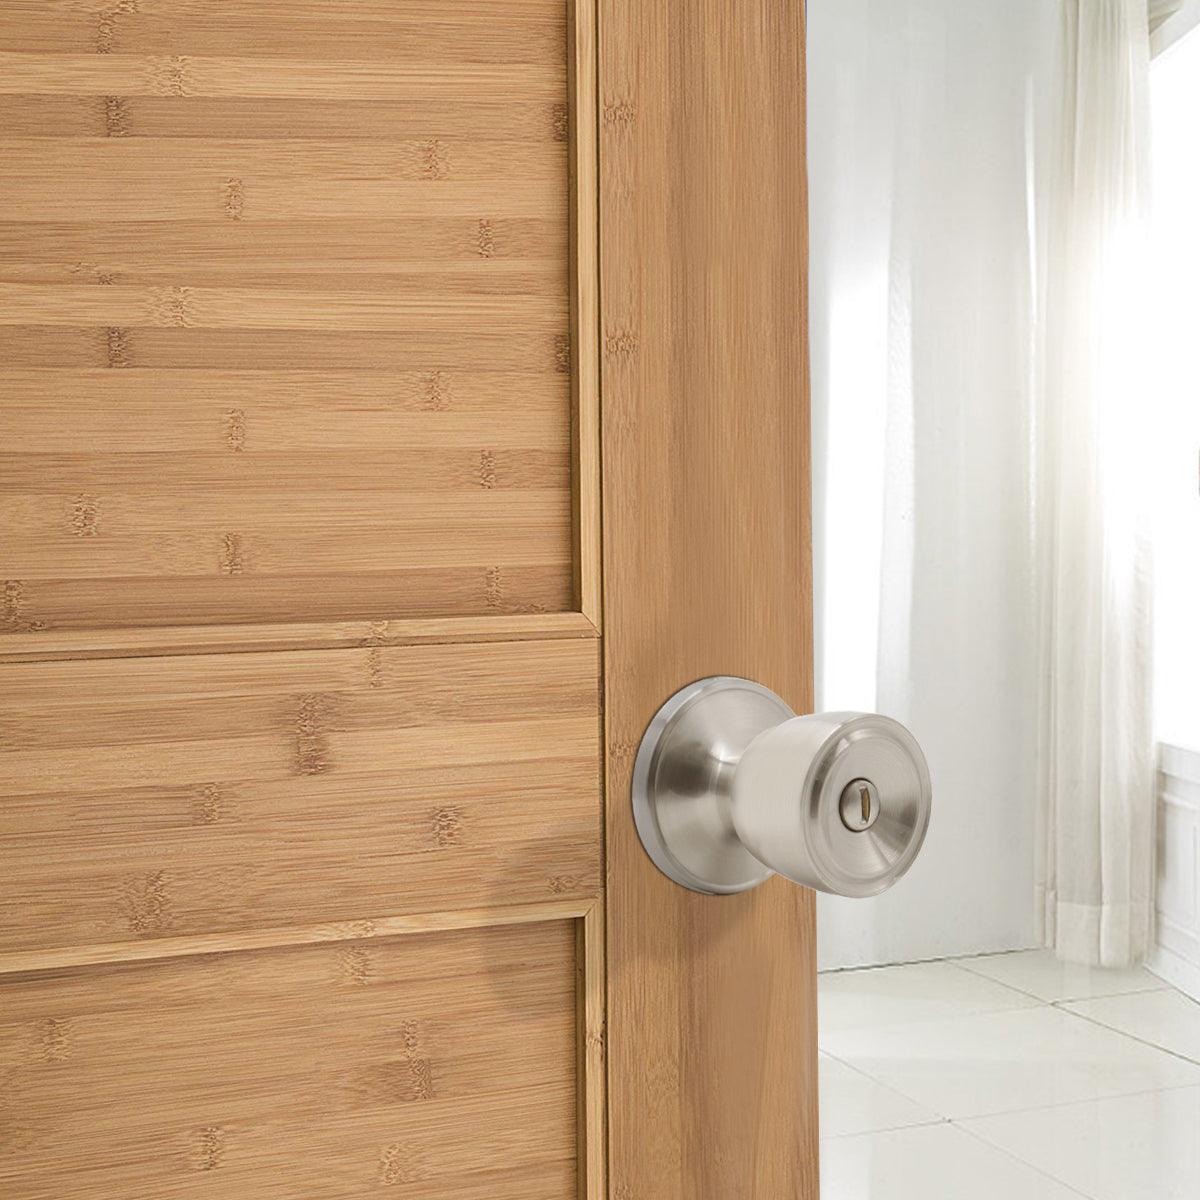 Tulip Style Door Knob Dummy/Privacy/Passage/Entry Keyed Door Lock Knobs Satin Nickel Finish DL591SN